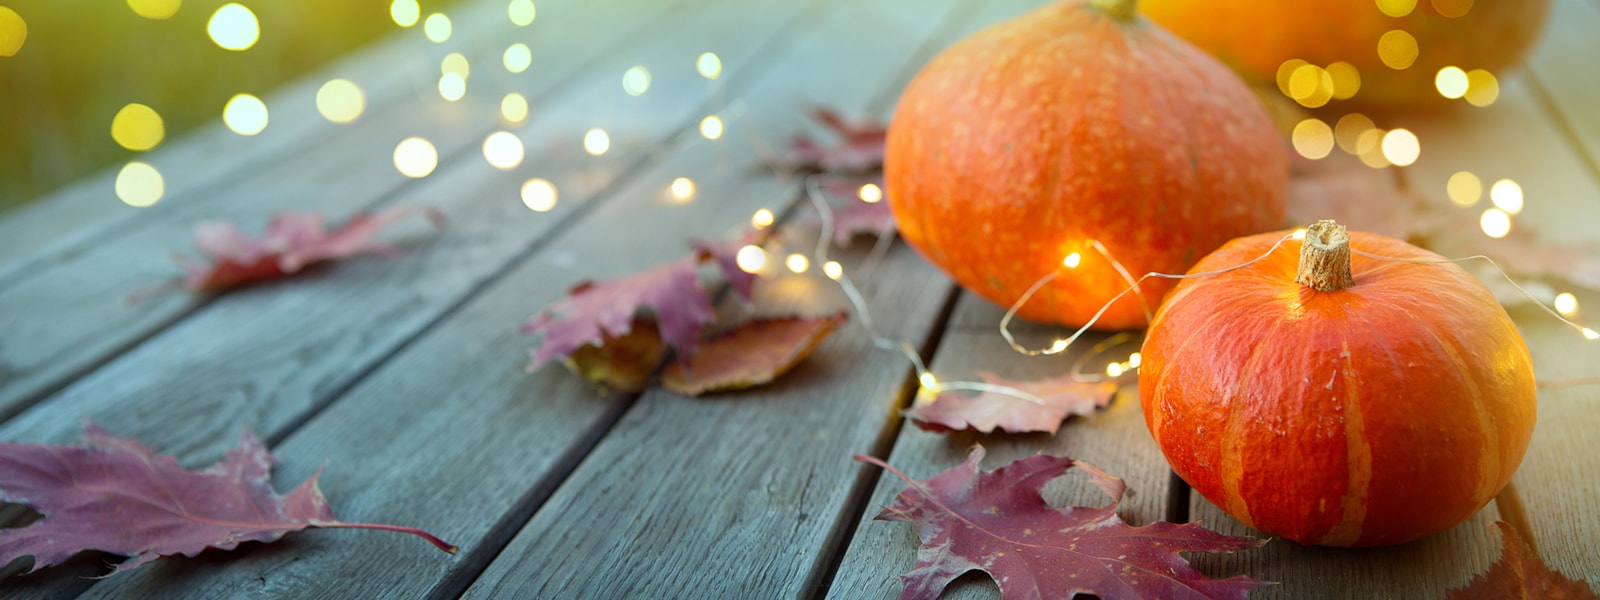 leaves, twinkling lights, and pumpkins